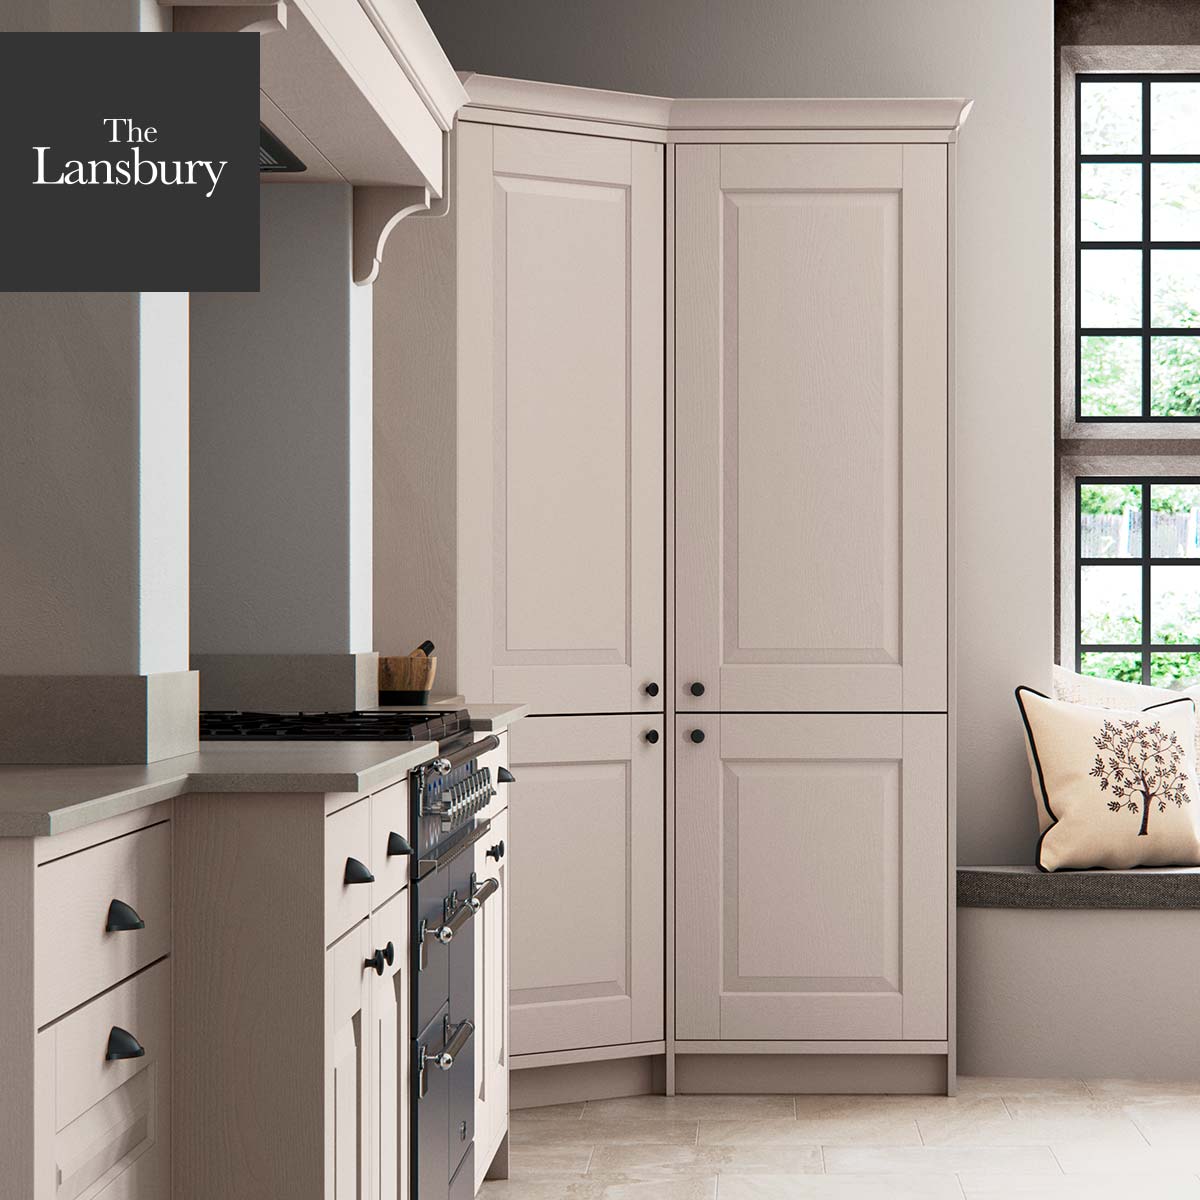 Corner Kitchen Pantry The Lansbury By, Free Standing Tall Corner Kitchen Cabinet